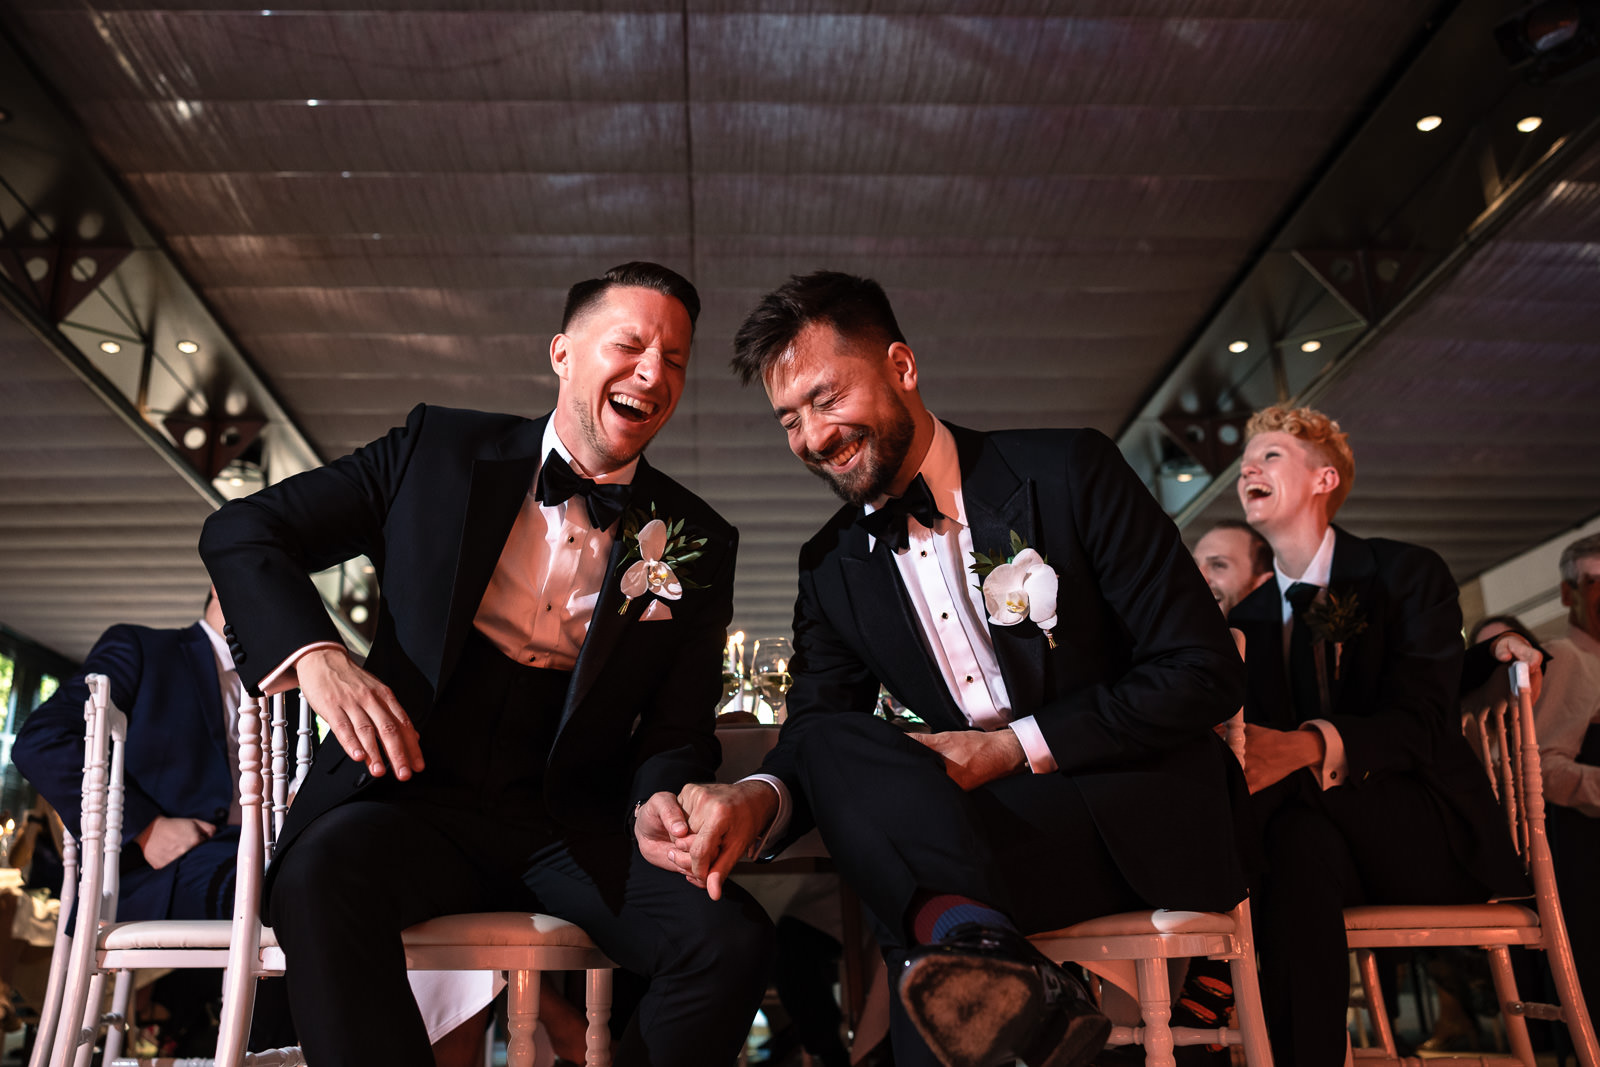 Laughter during dinner speeches same sex wedding